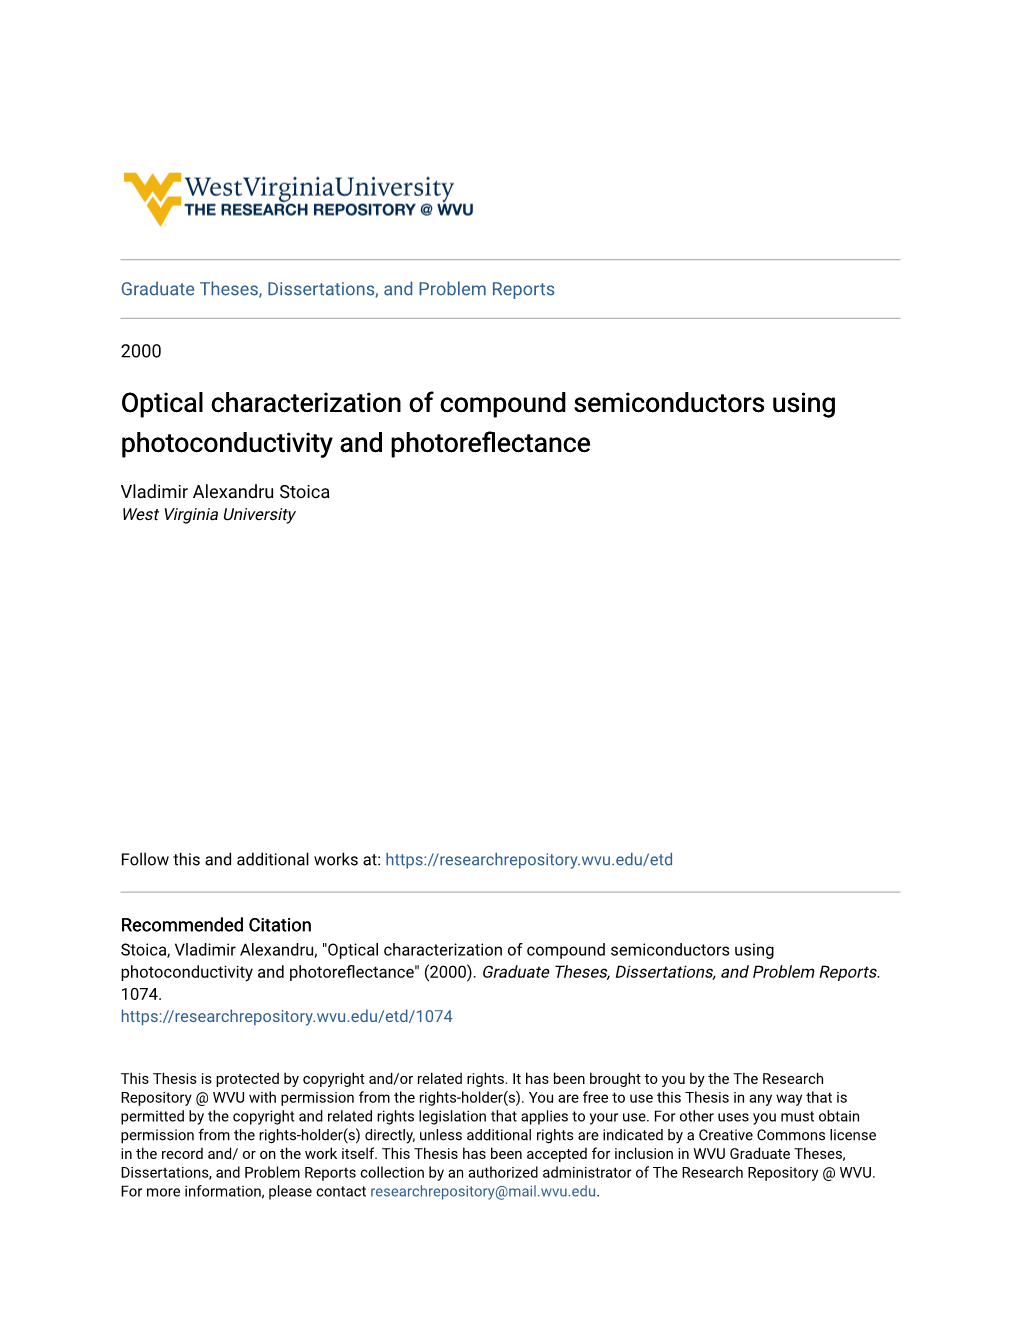 Optical Characterization of Compound Semiconductors Using Photoconductivity and Photoreflectance